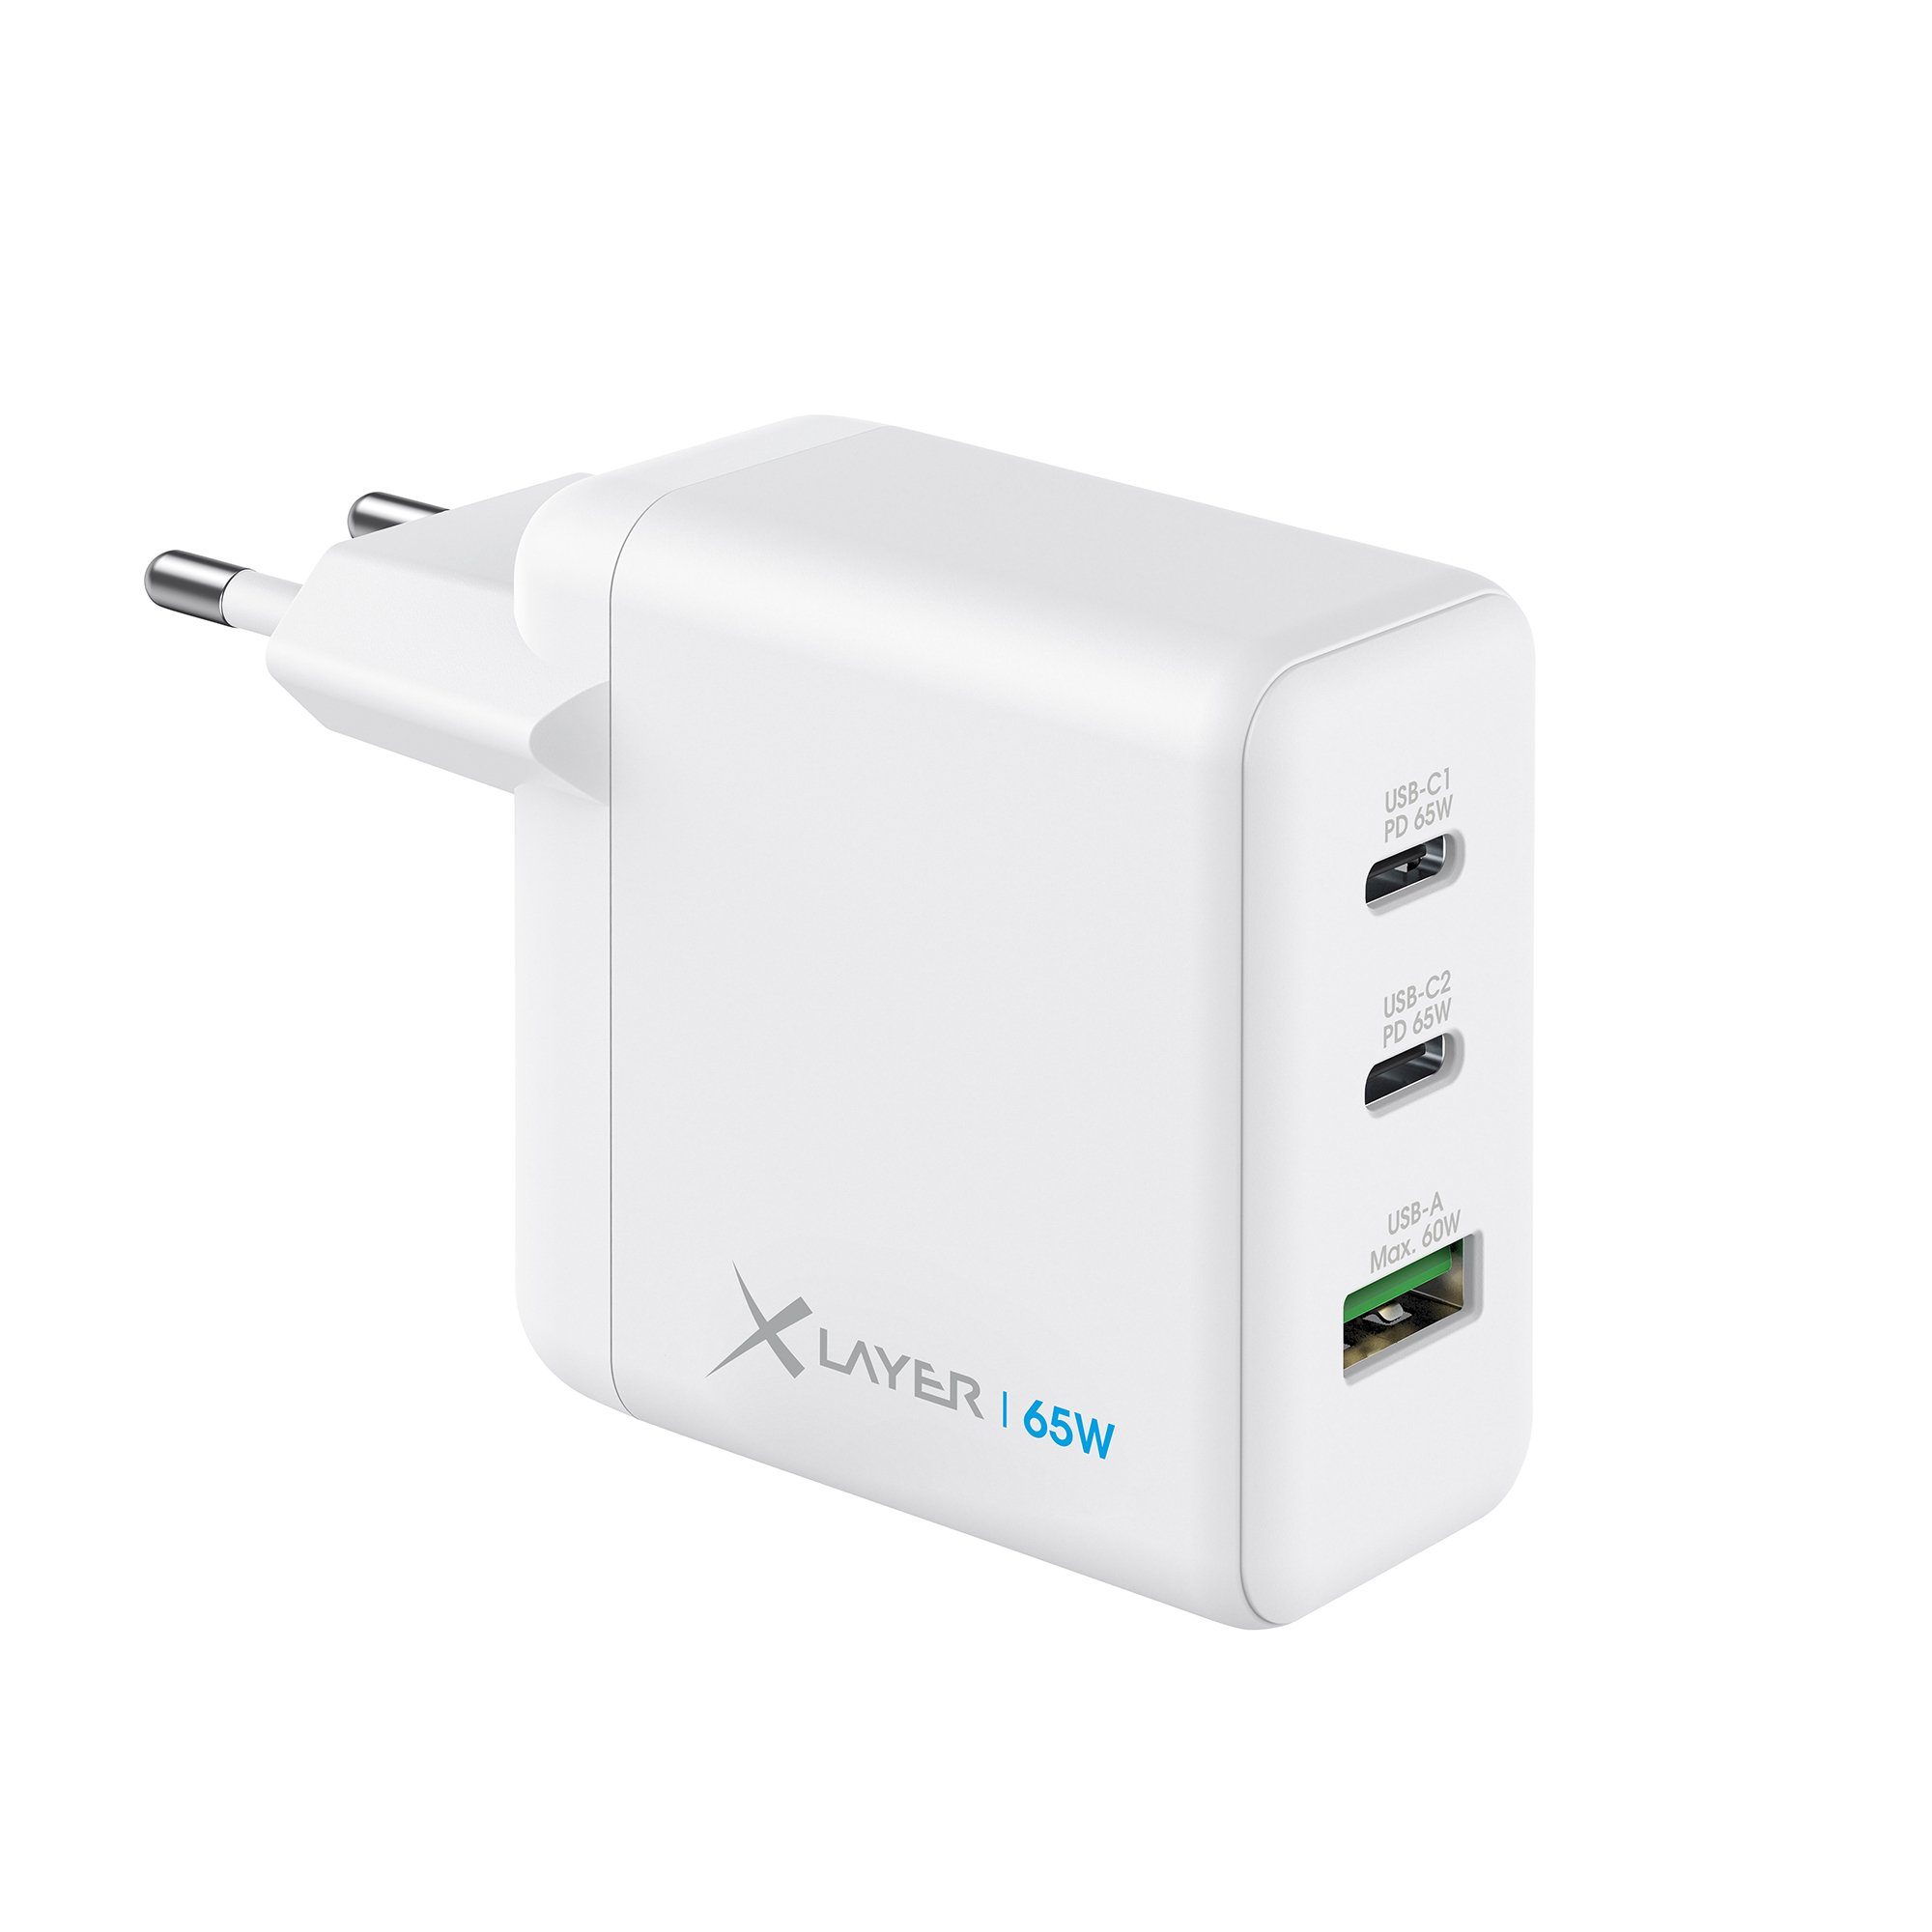 XLAYER Powercharger 65W USB-C Schnellladegerät GaN Technologie 3-Port Smartphone-Ladegerät Weiß